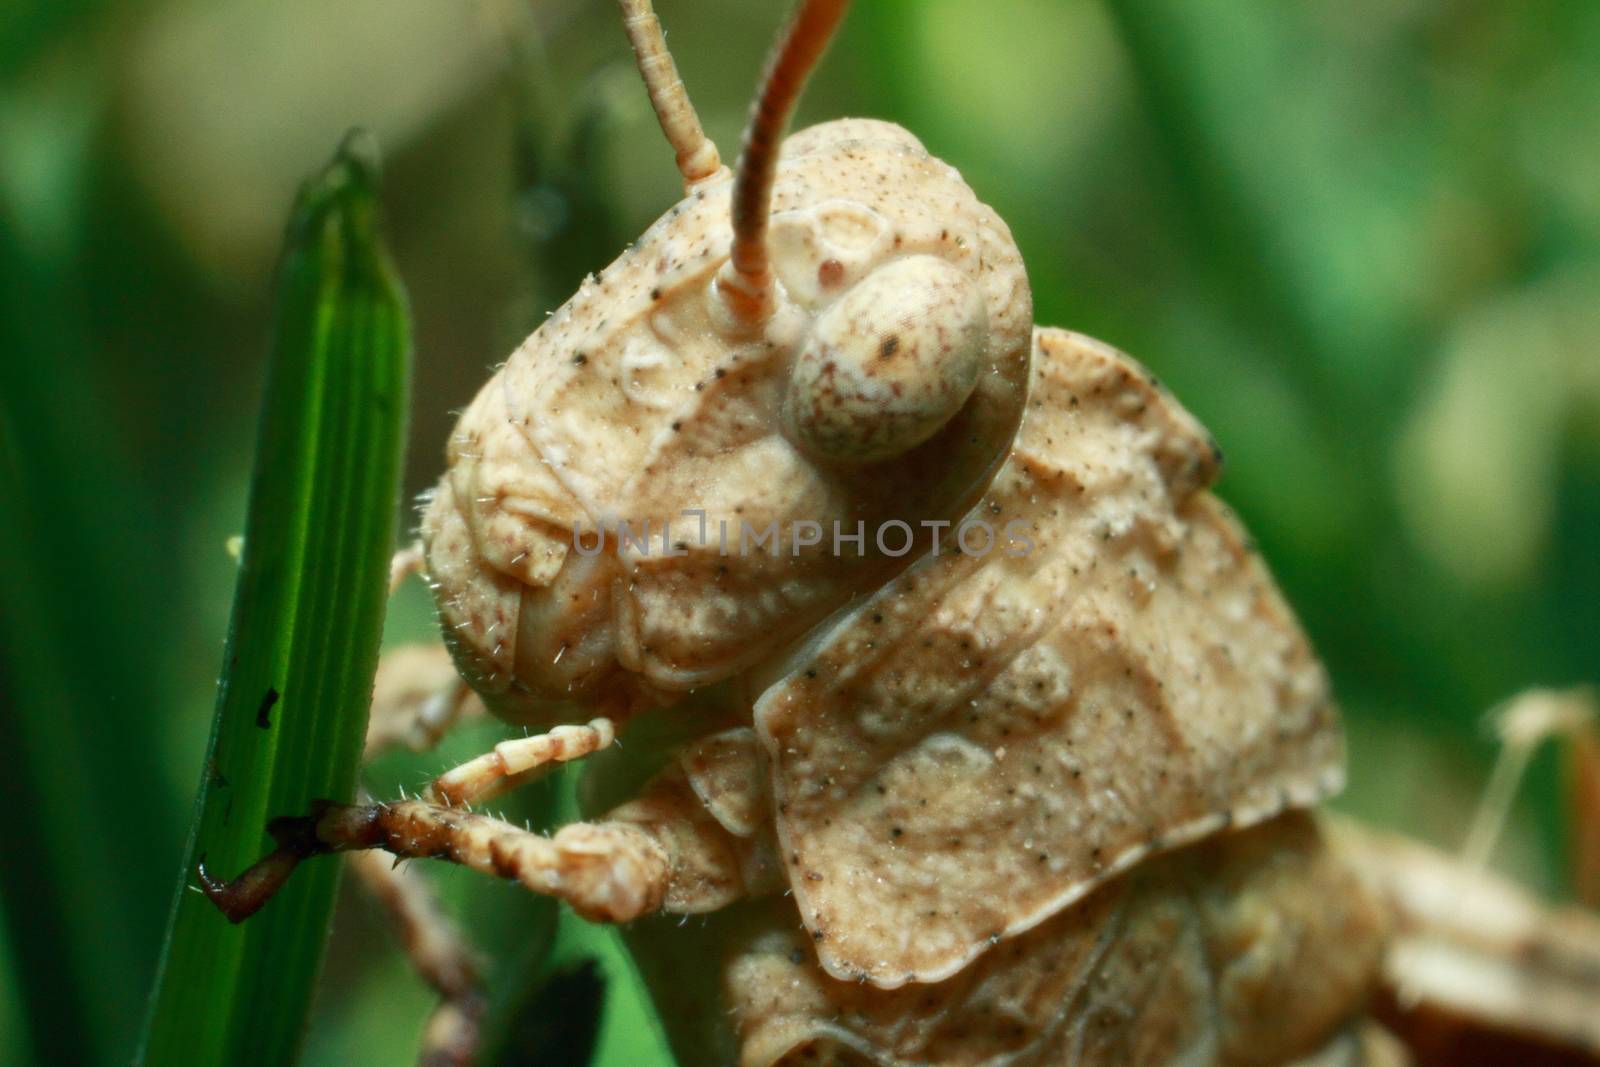 Extreme locust closeup. Grasshopper on a green leaf. High quality photo